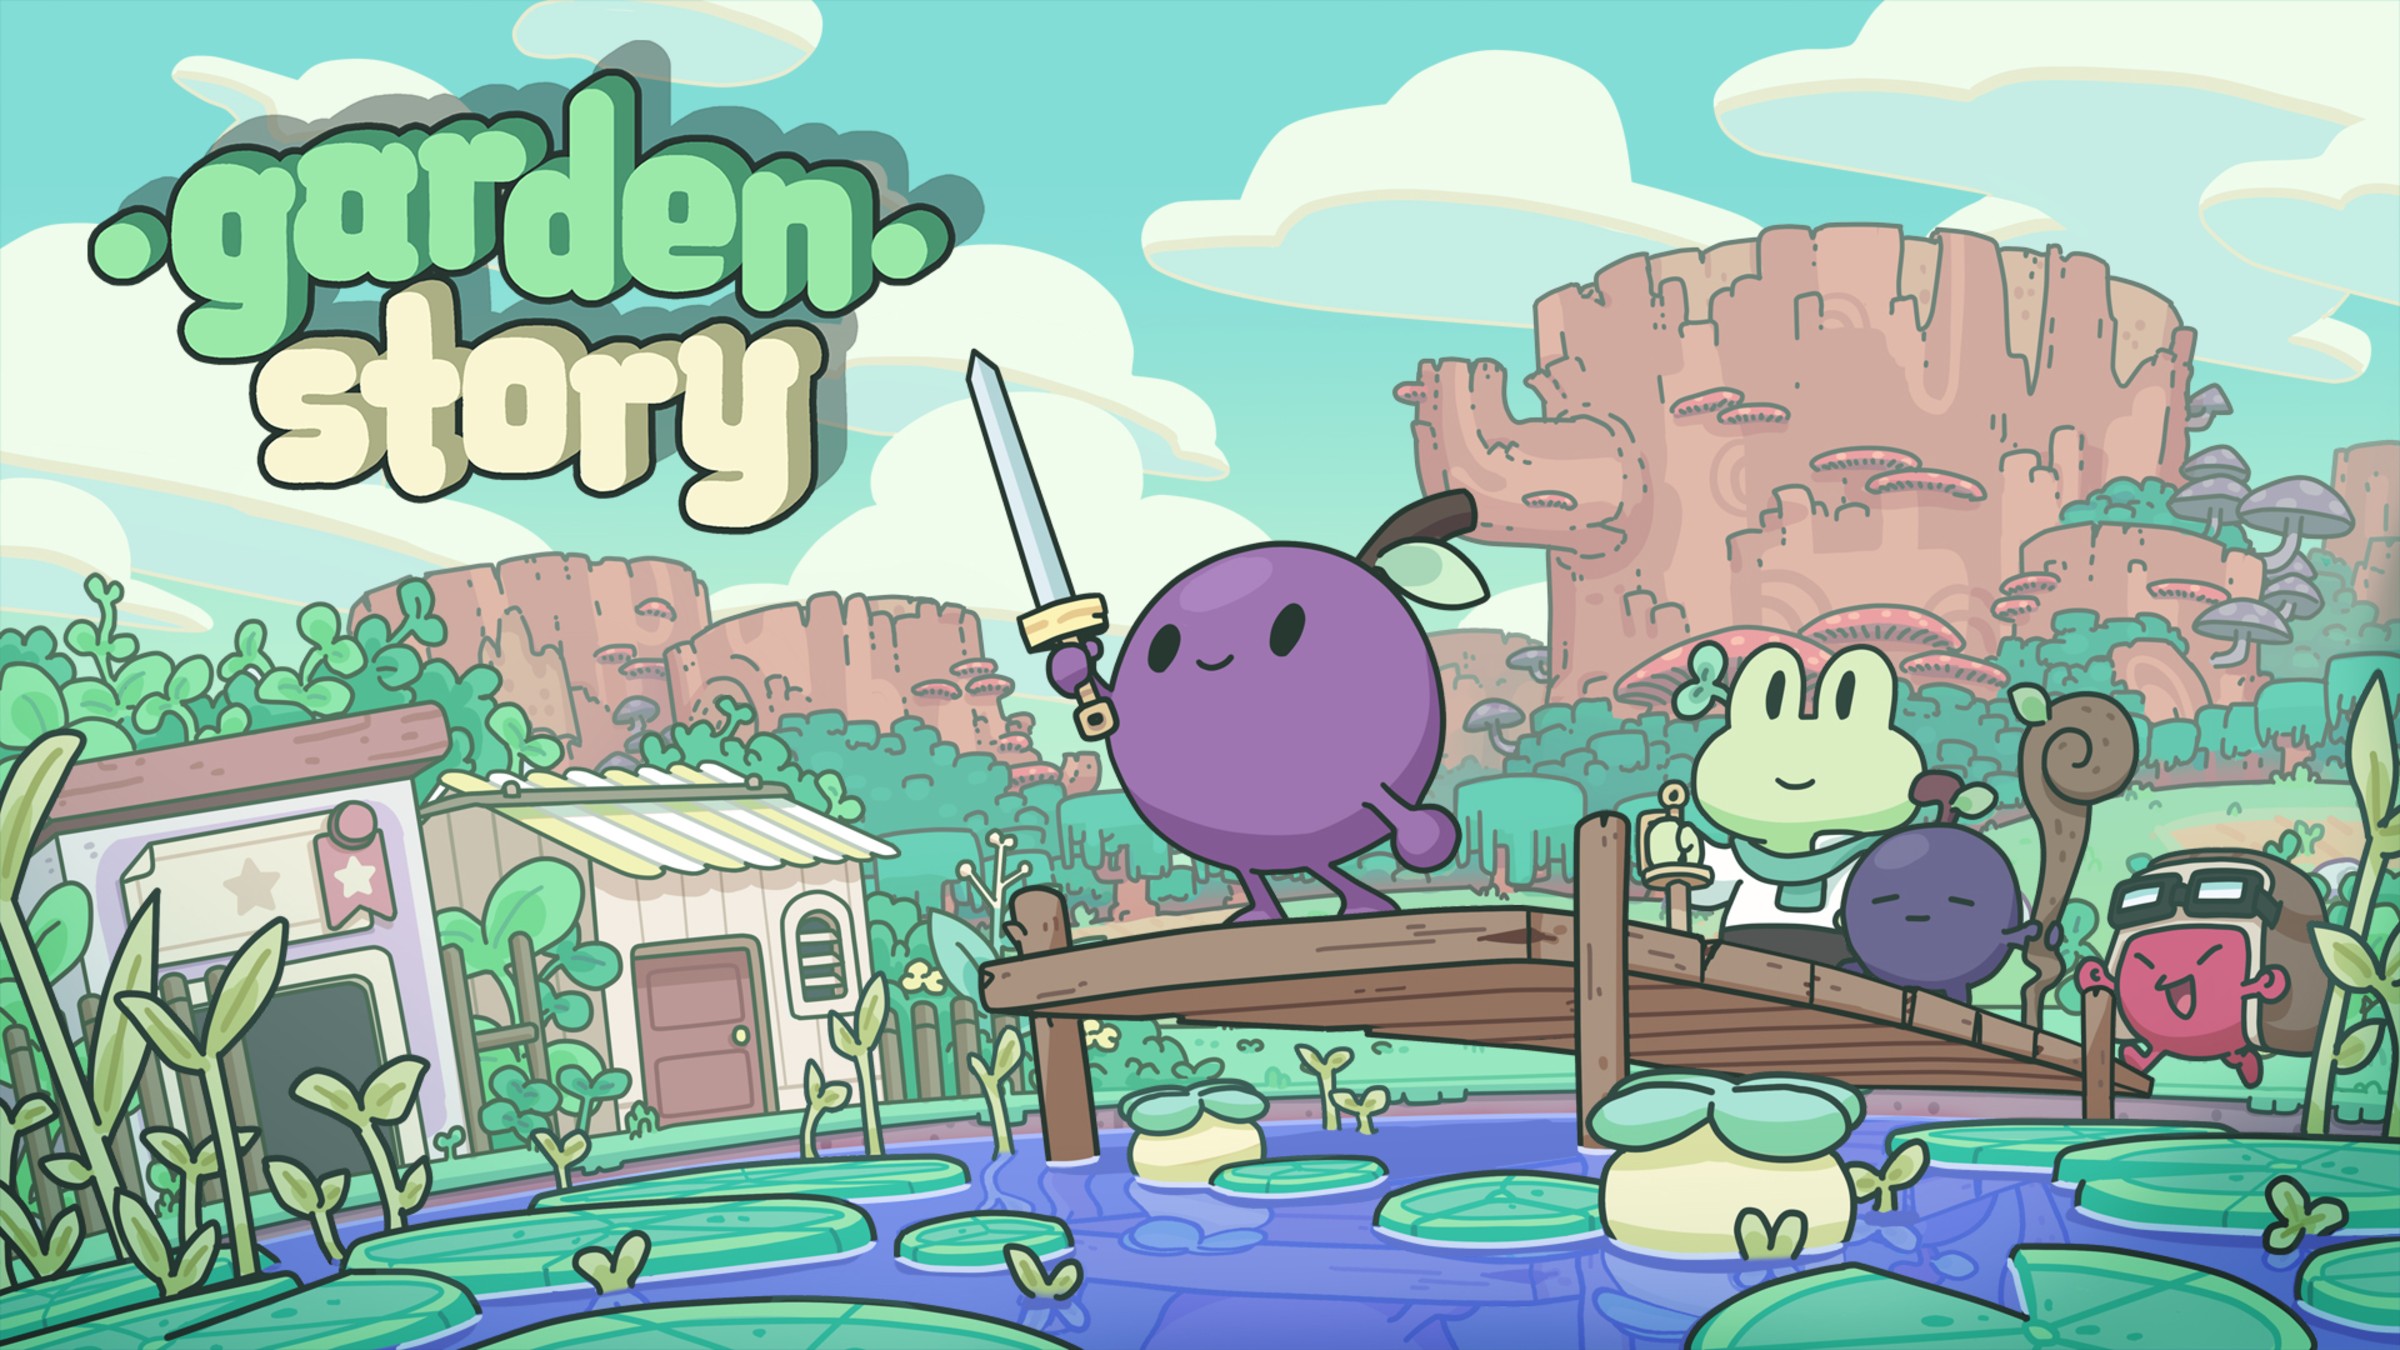 Garden Story (Limited Run Games) - Nintendo Switch (US - Region Free) NEW